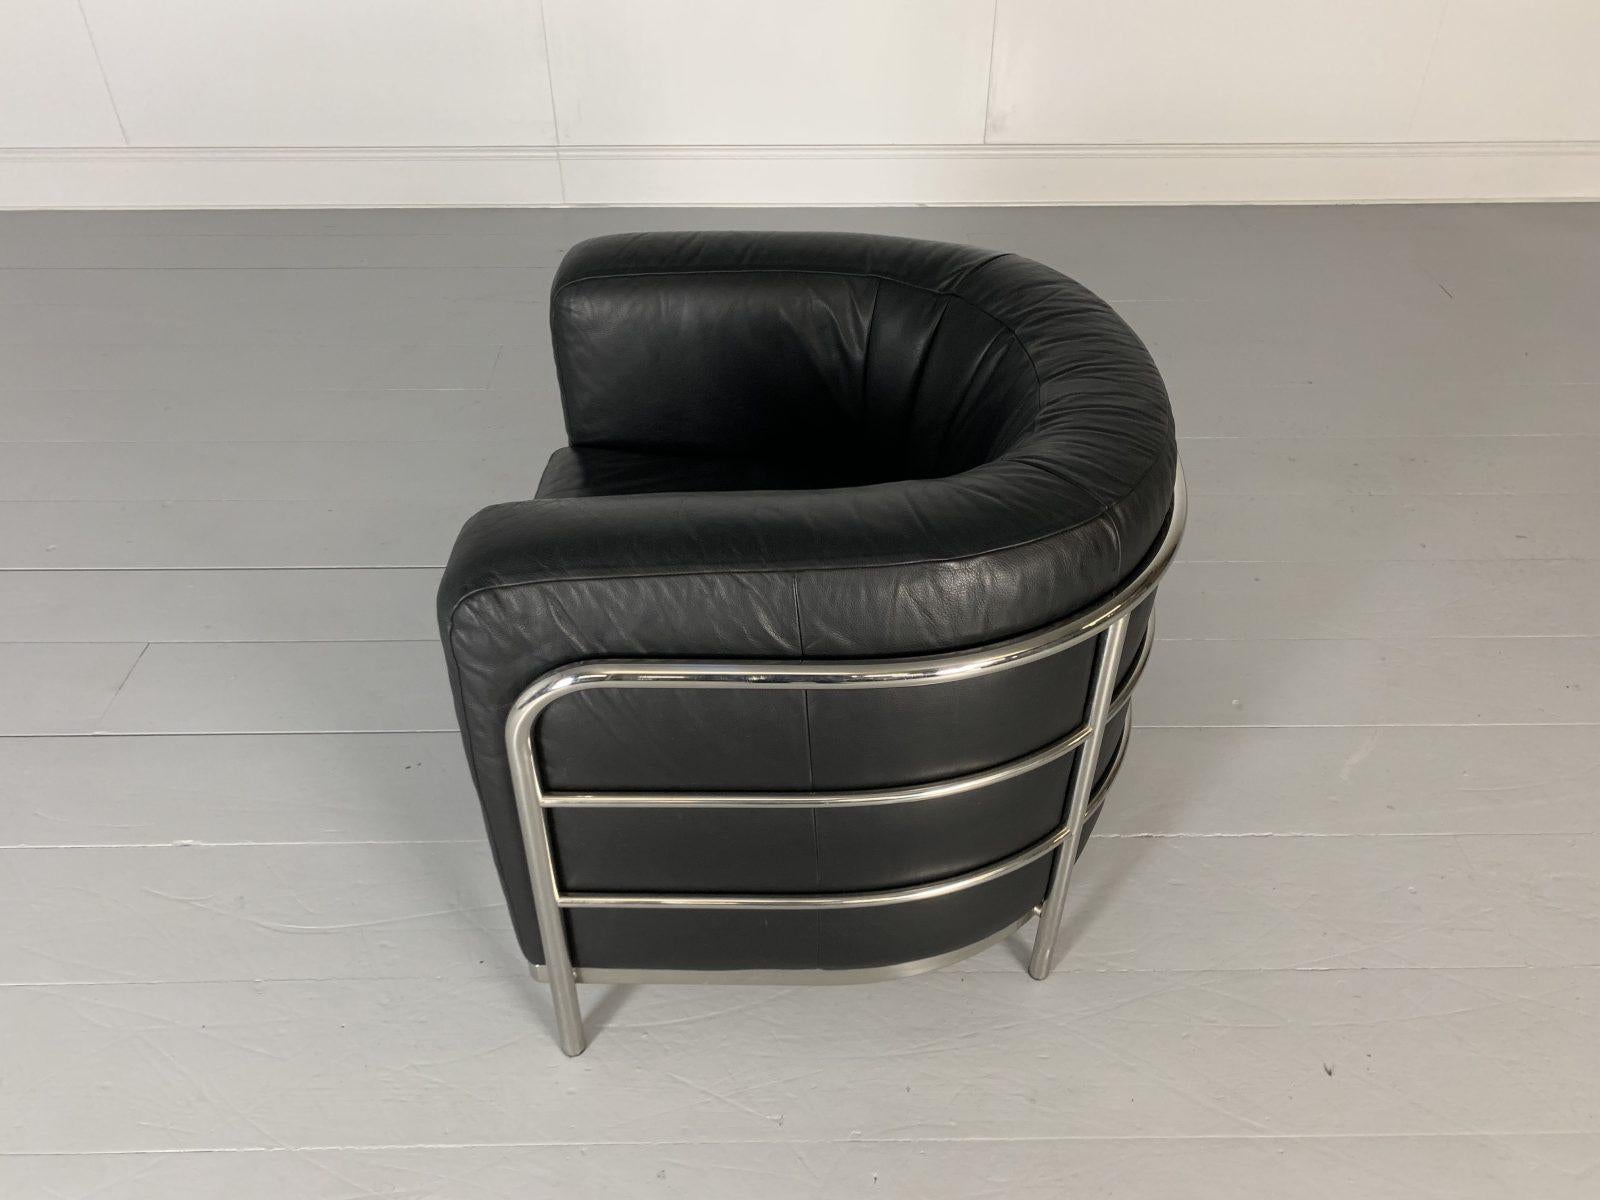 Zanotta “Onda” Armchair, in Black “Scozia” Leather and Chrome 6